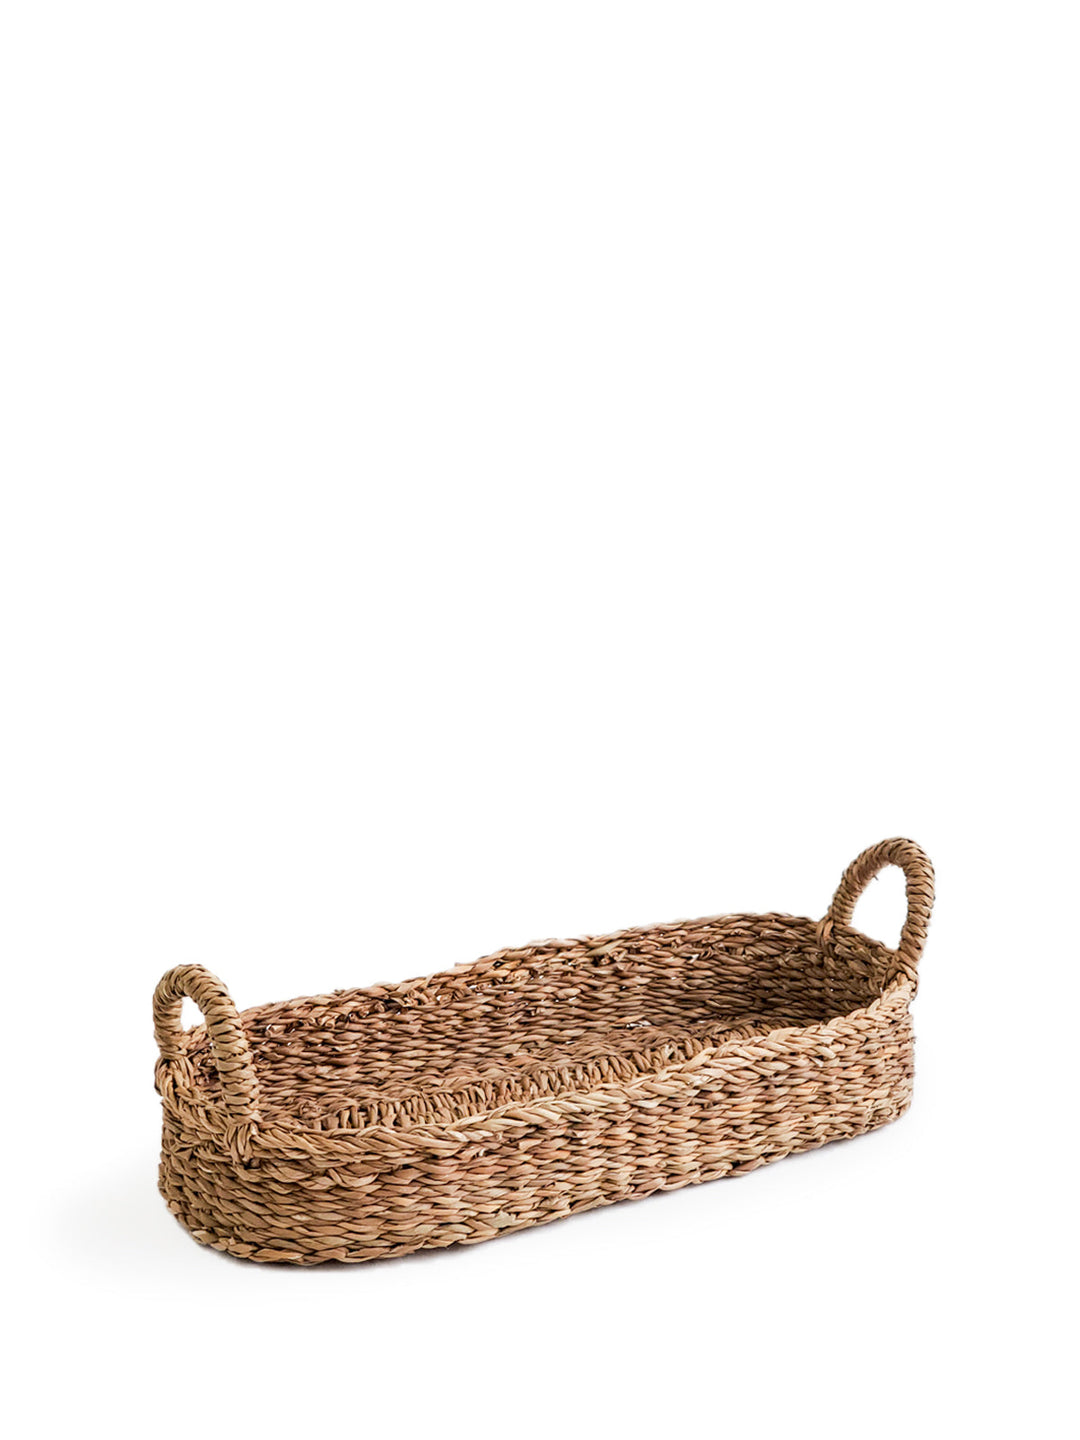 Savar Bread Basket with Natural Handle-8